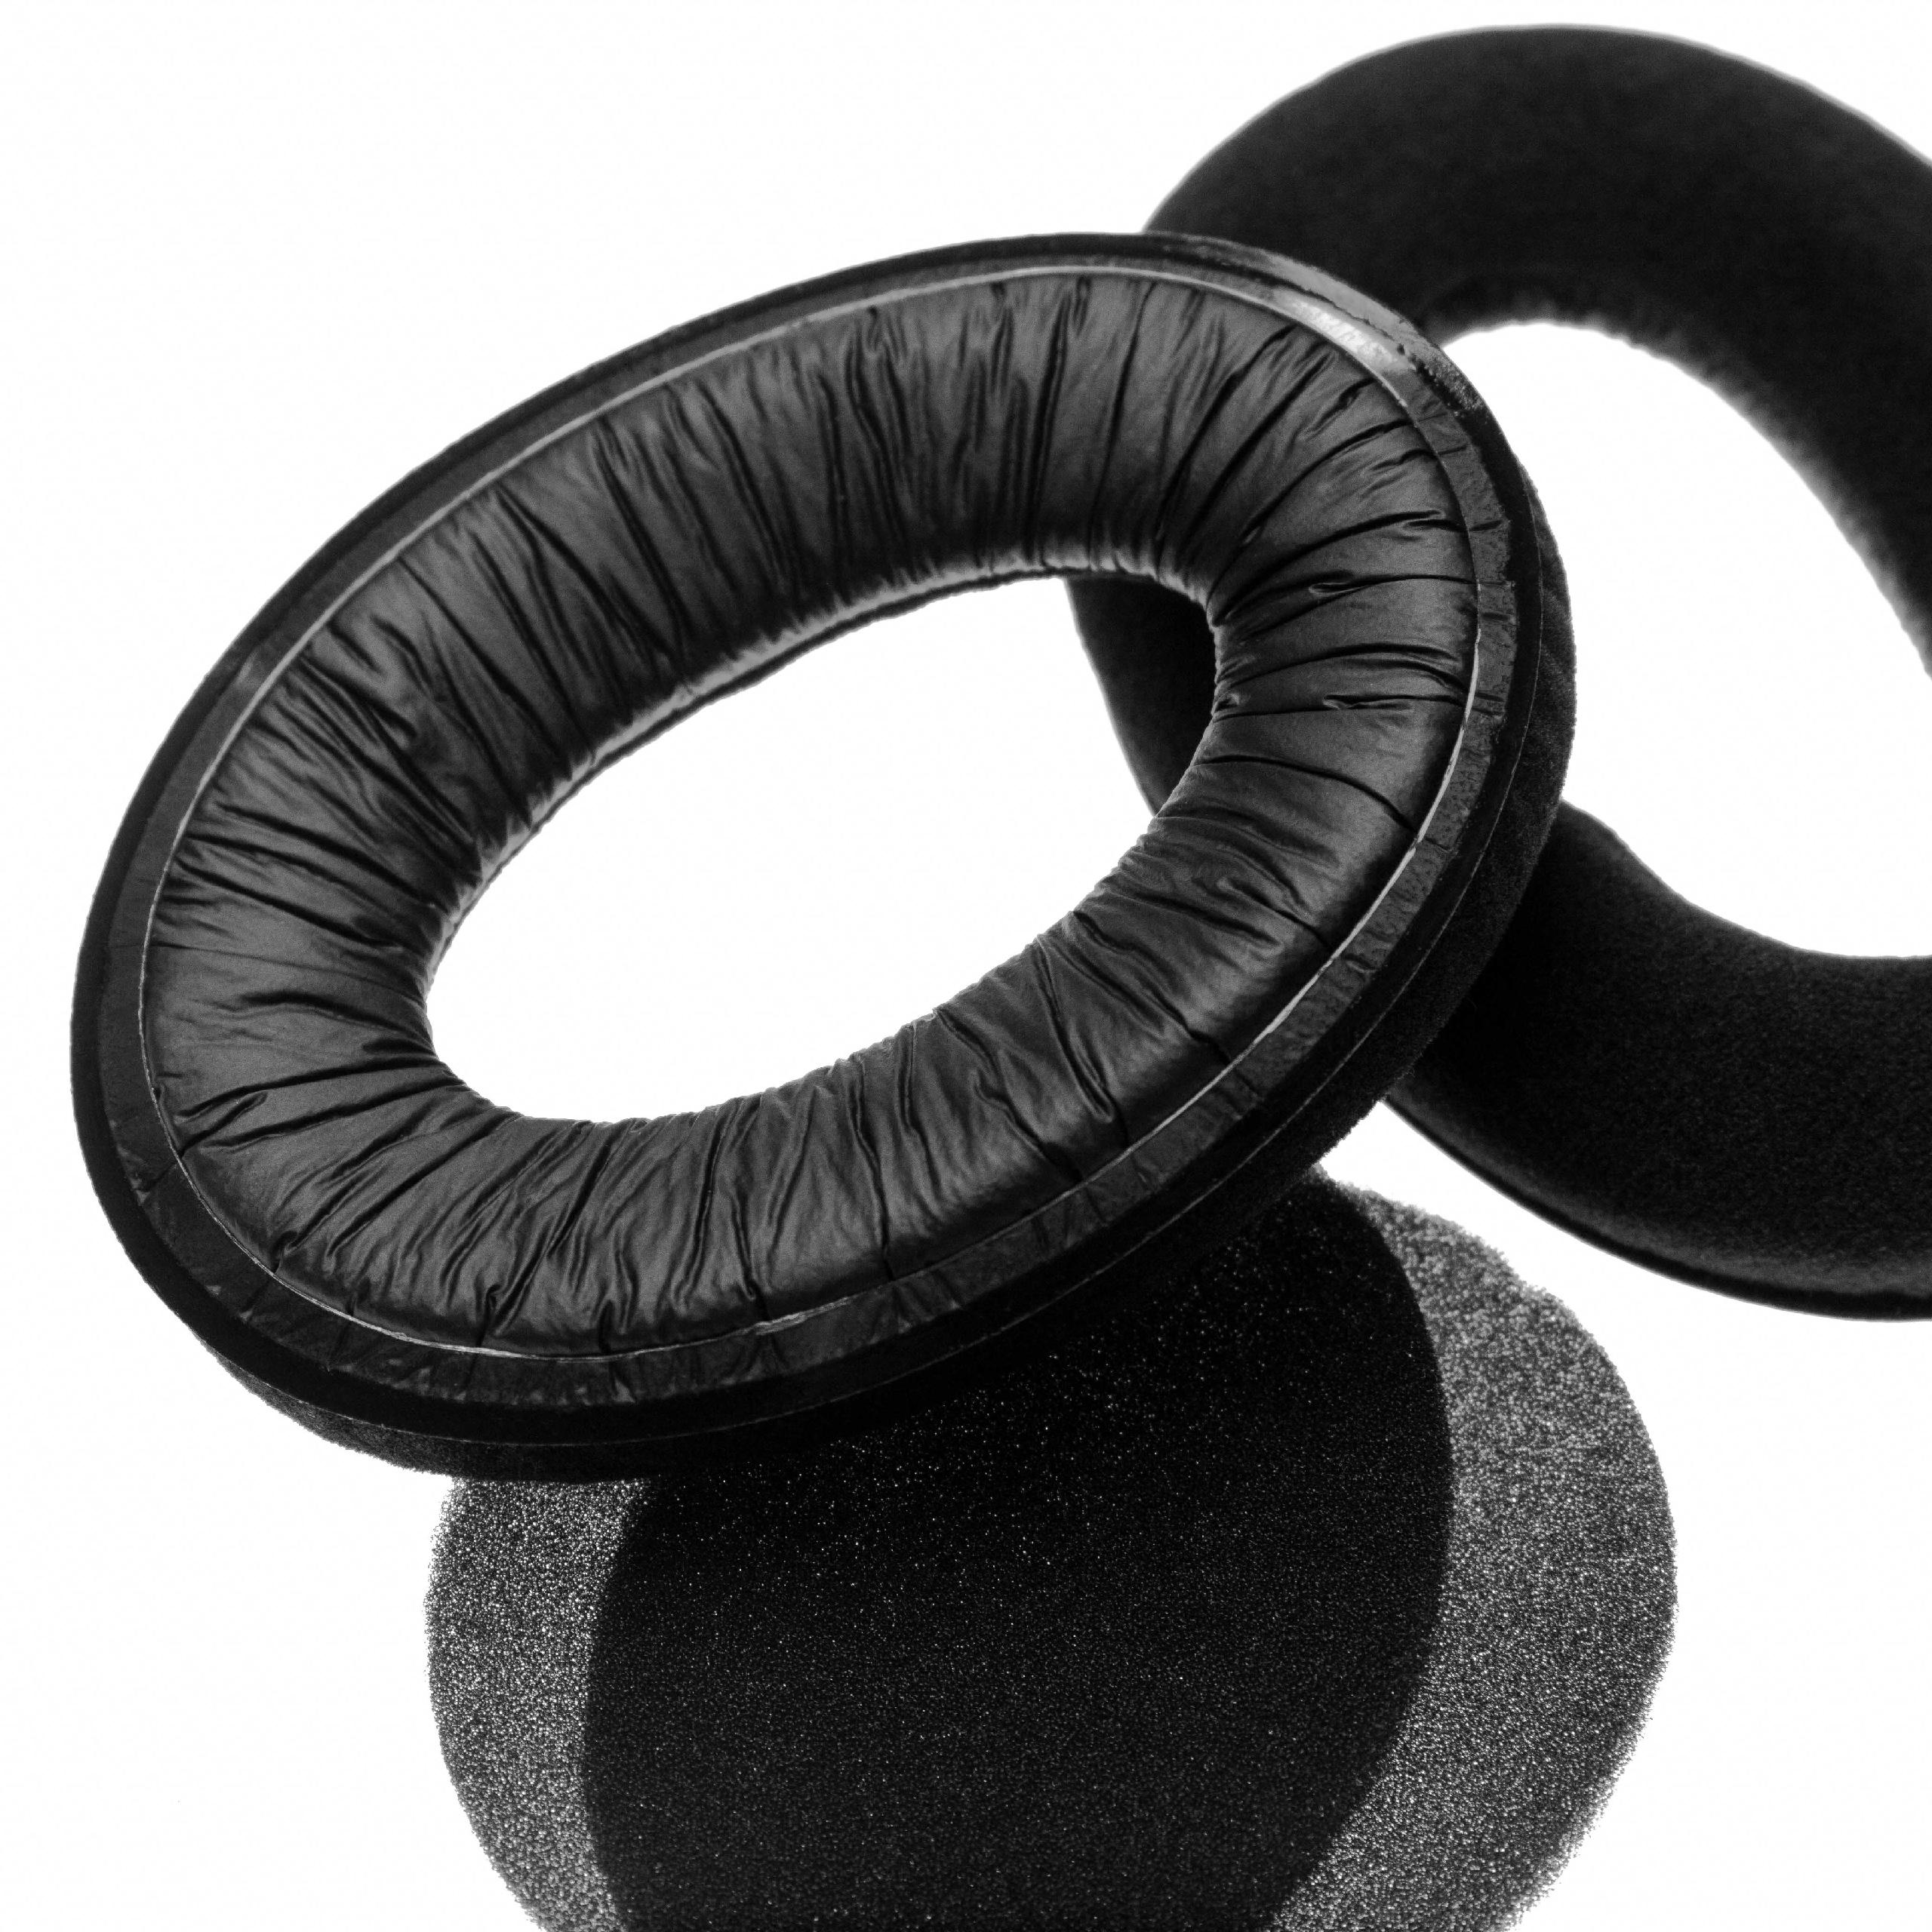 Ear Pads suitable for Sennheiser HD515 Headphones etc. - foam, 20 mm thick